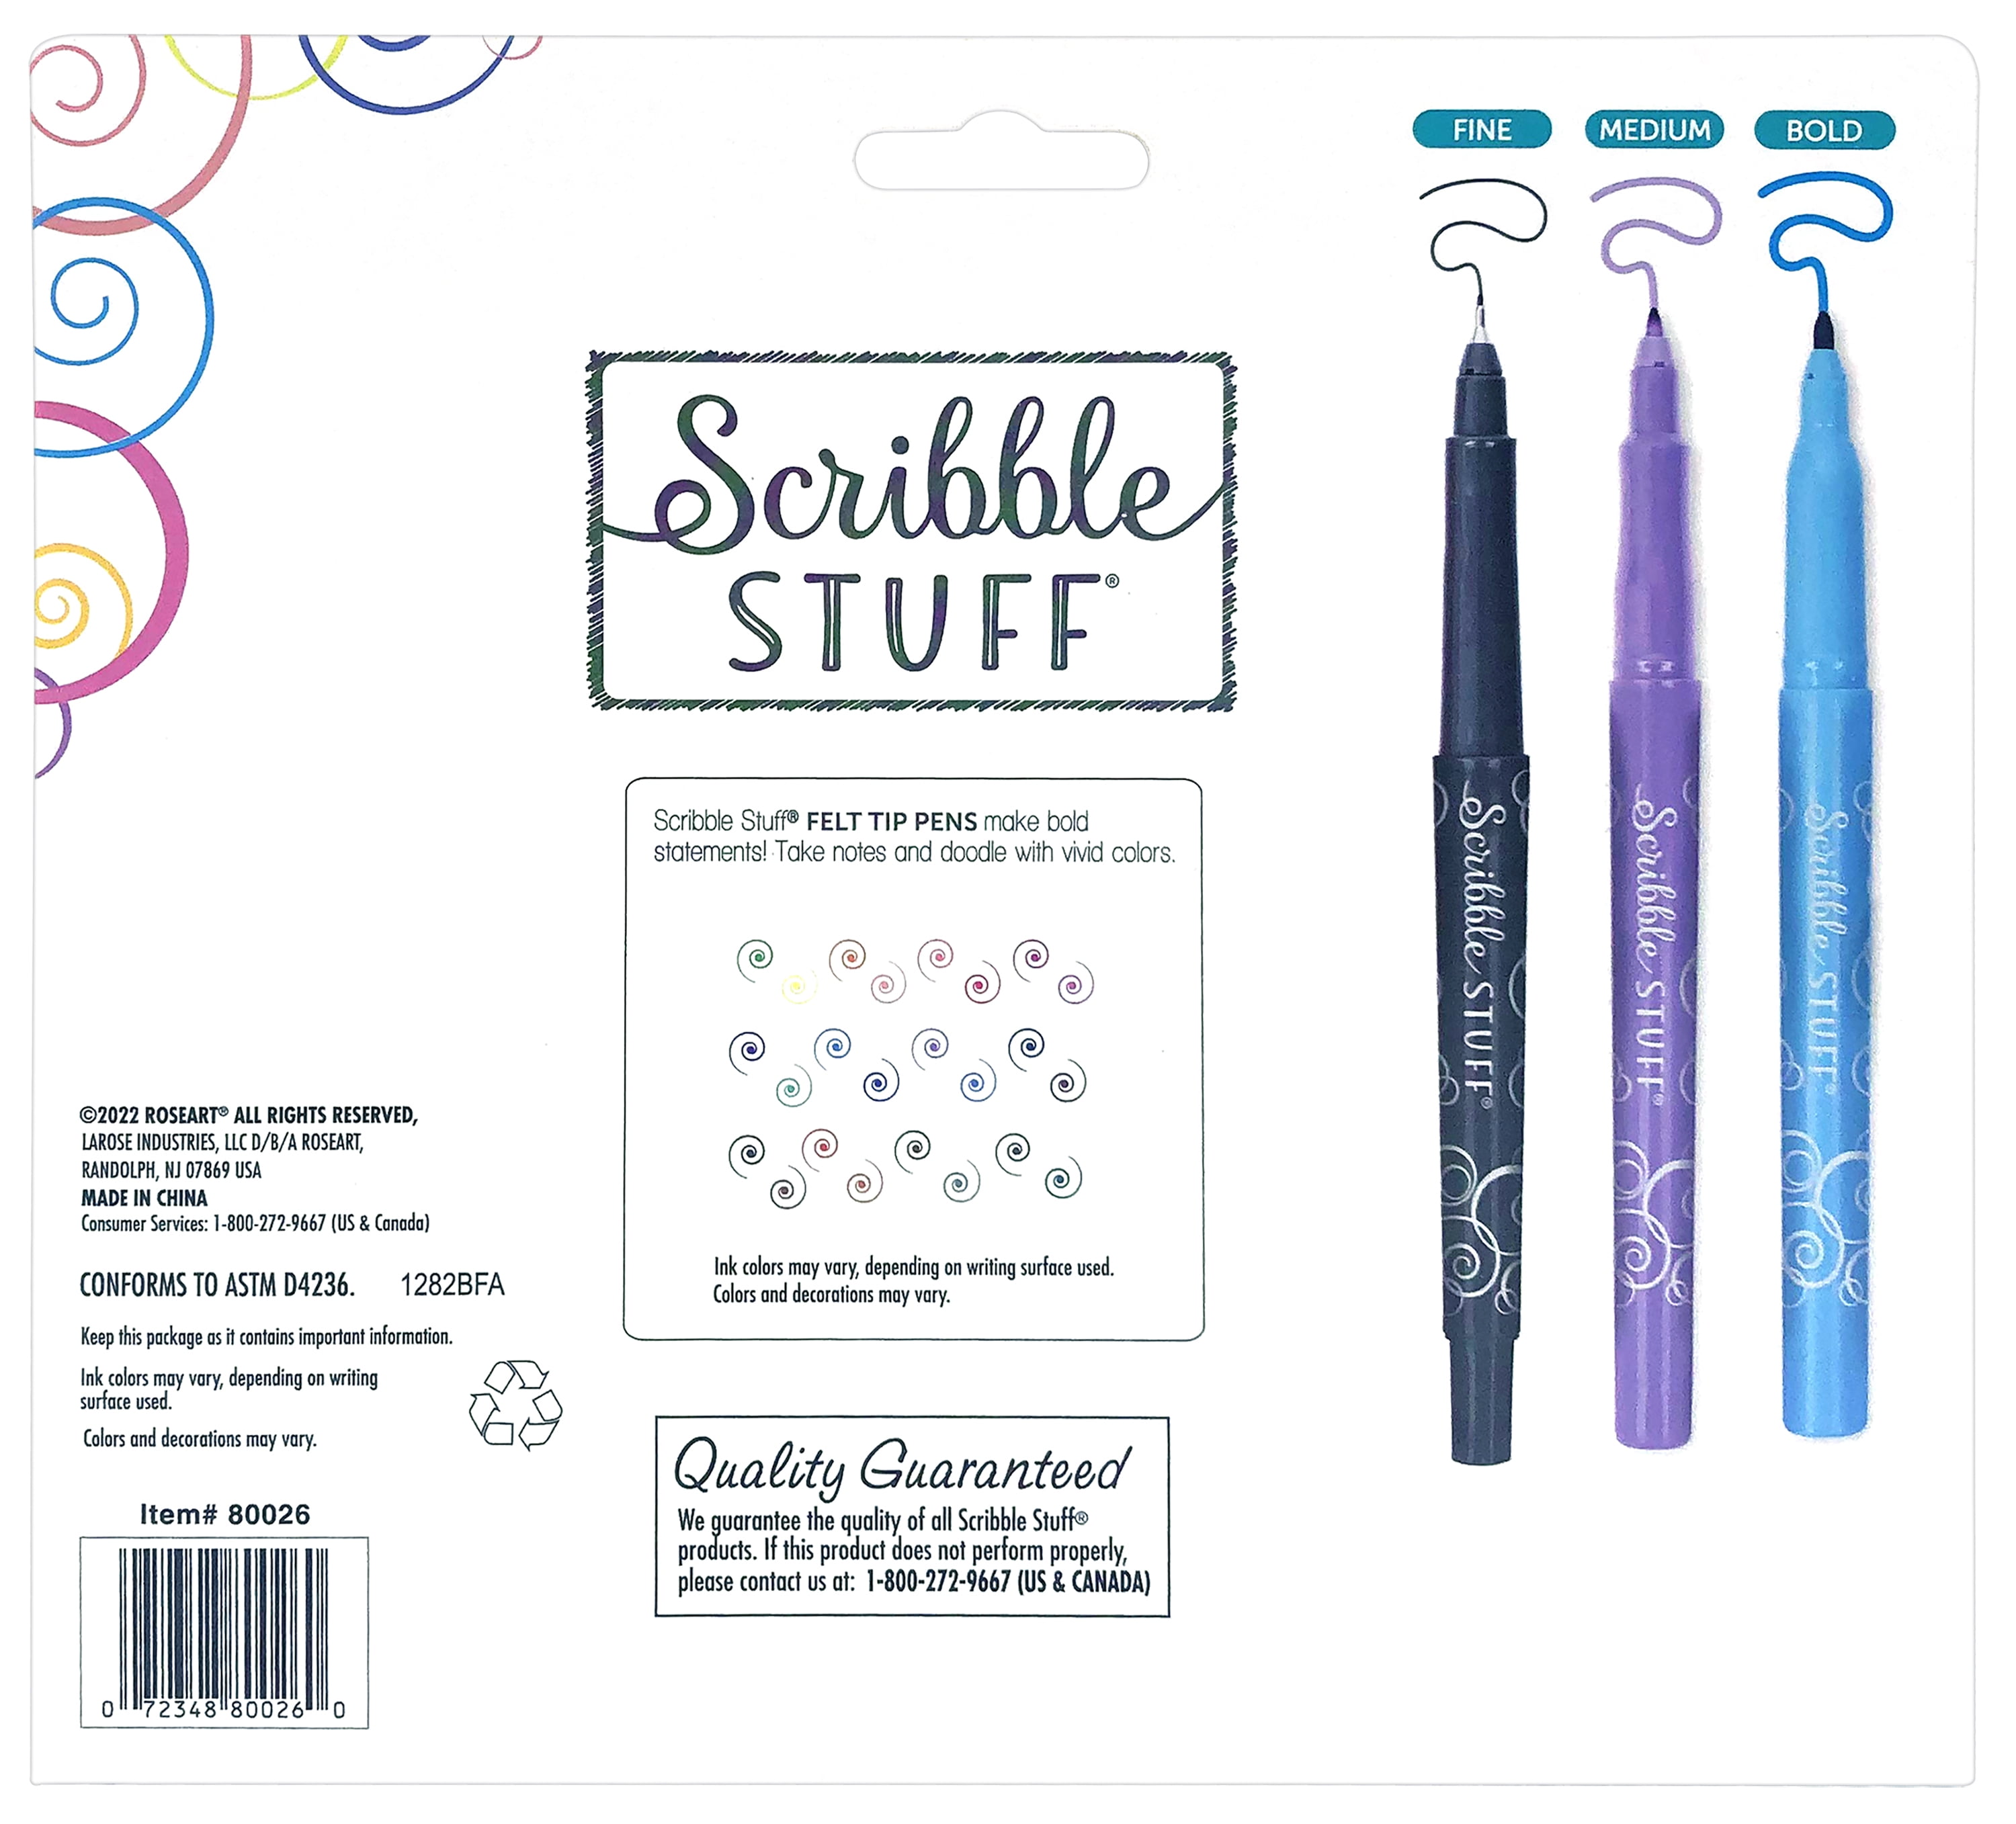 Scribble Stuff Felt Tip Pens and Gel Pens